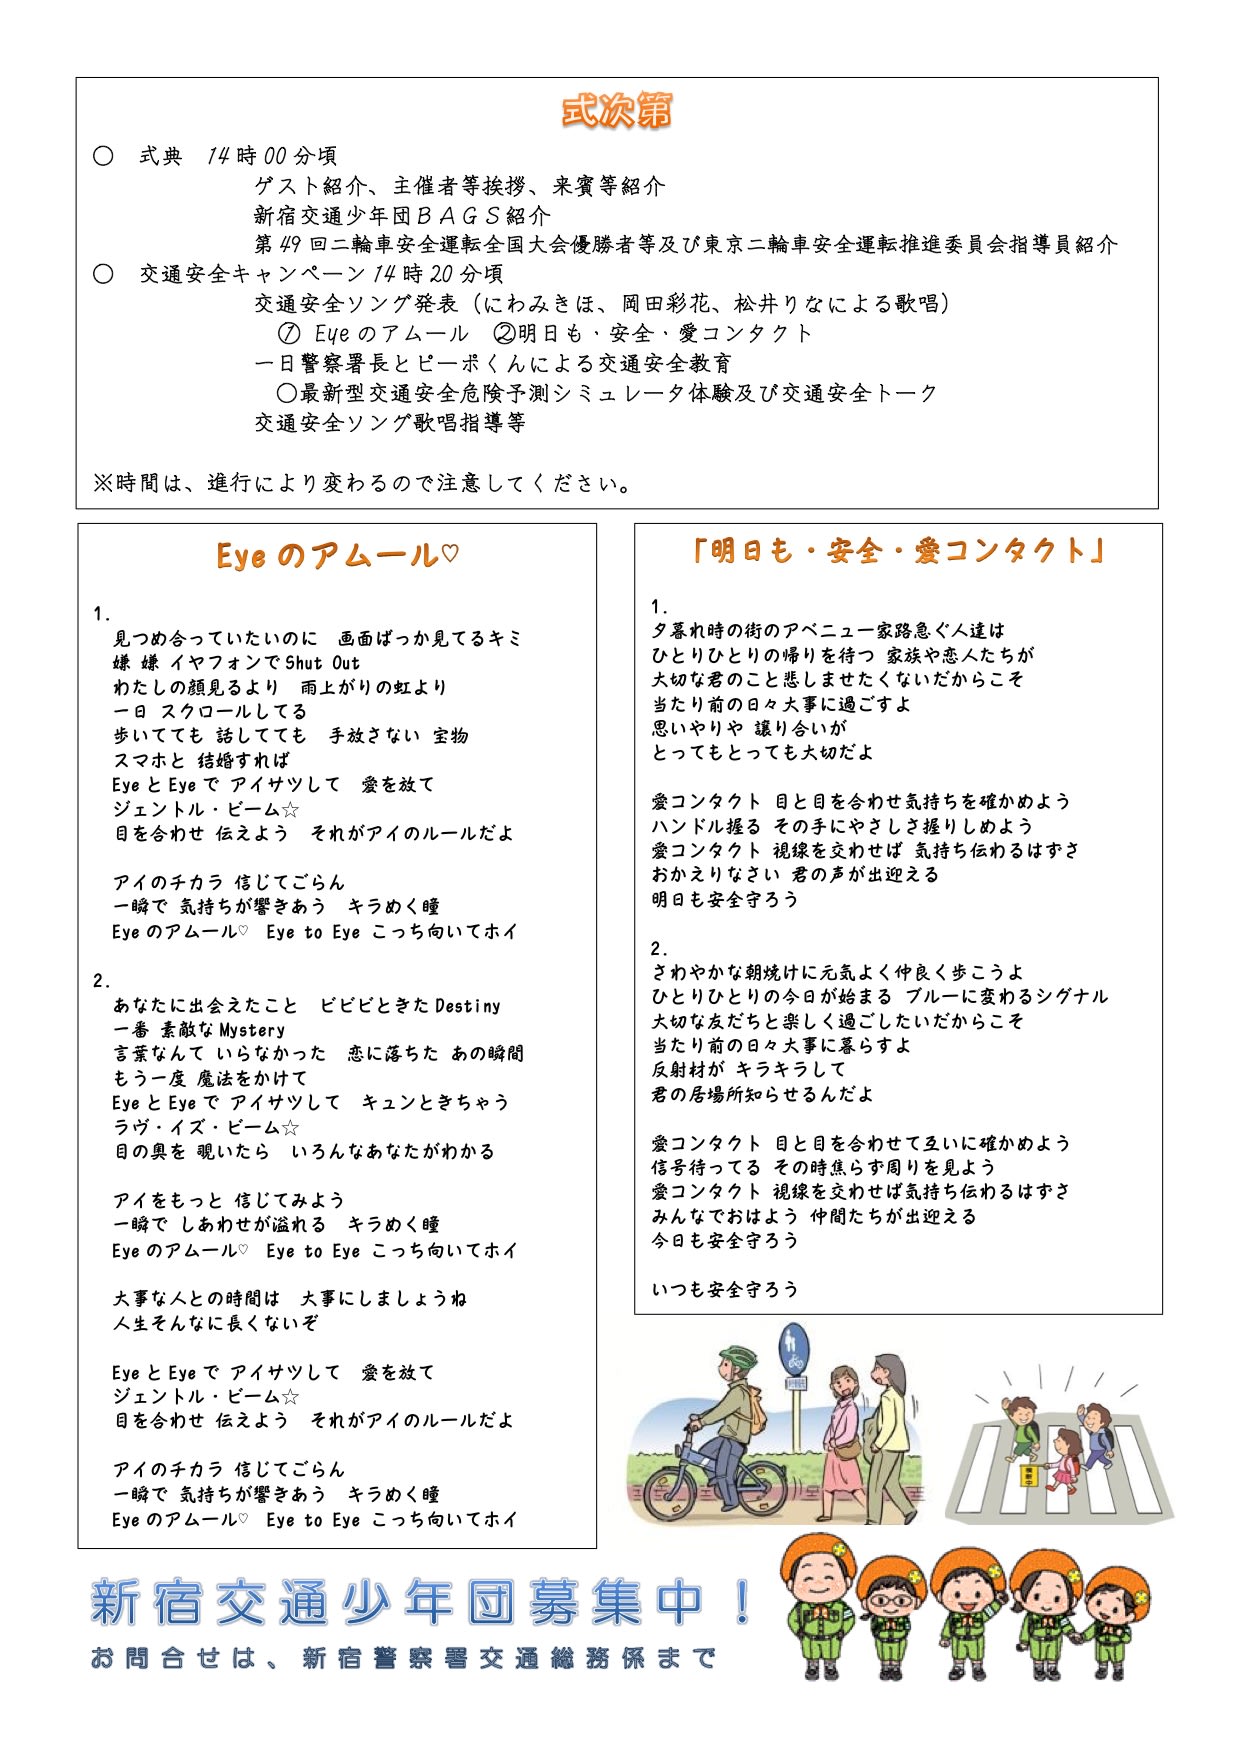 秋の全国交通安全運動 新宿交通安全キャンペーン 歌詞提供 彩彩日記